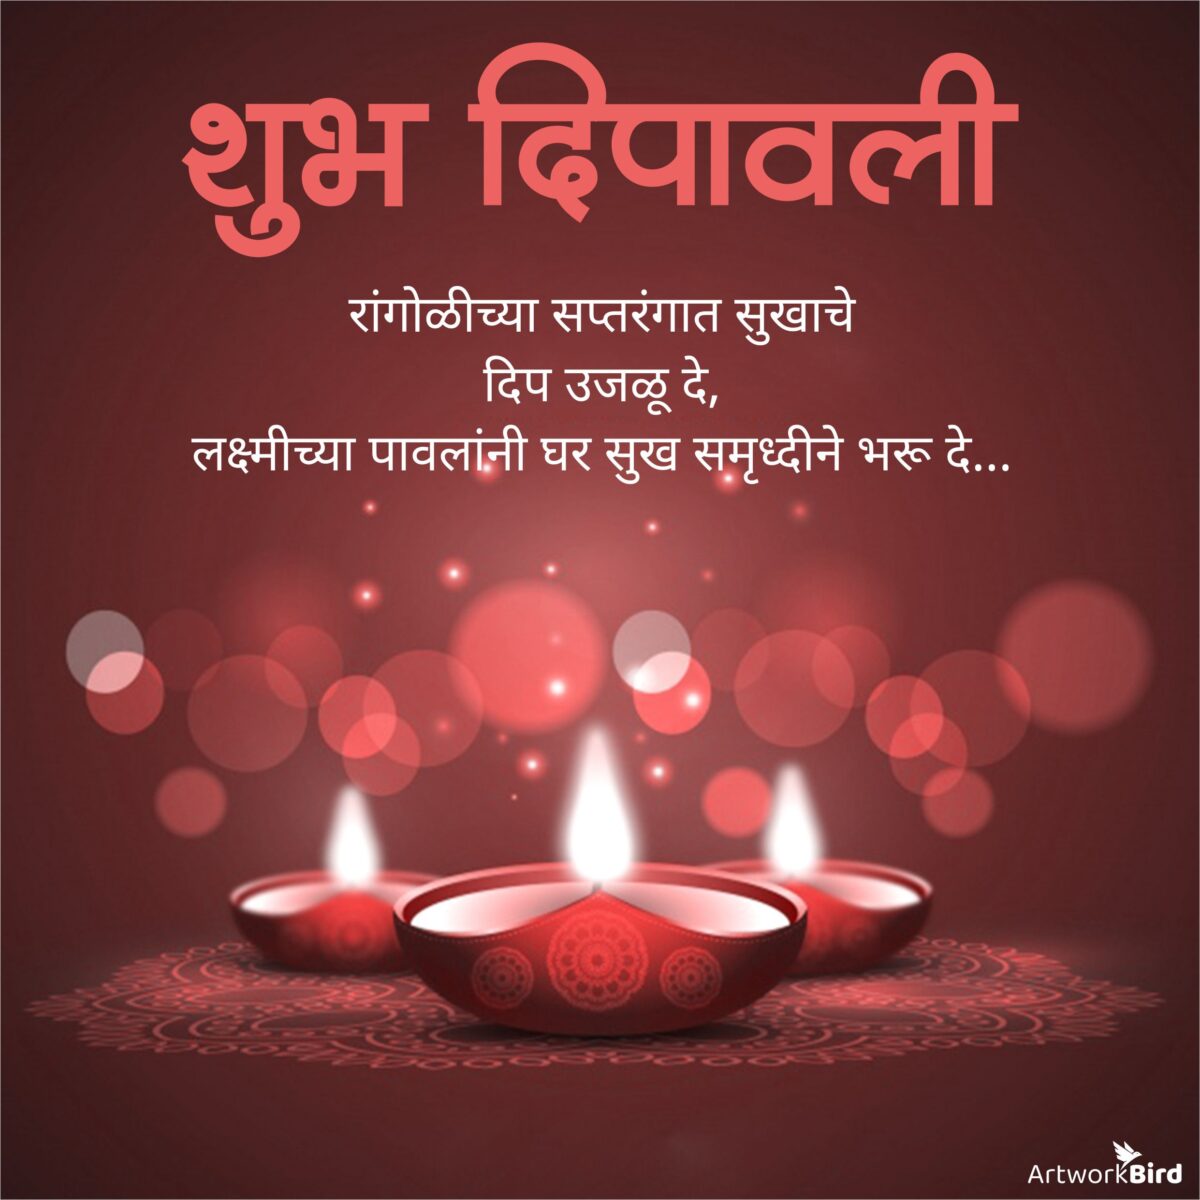 diwali greetings marathi